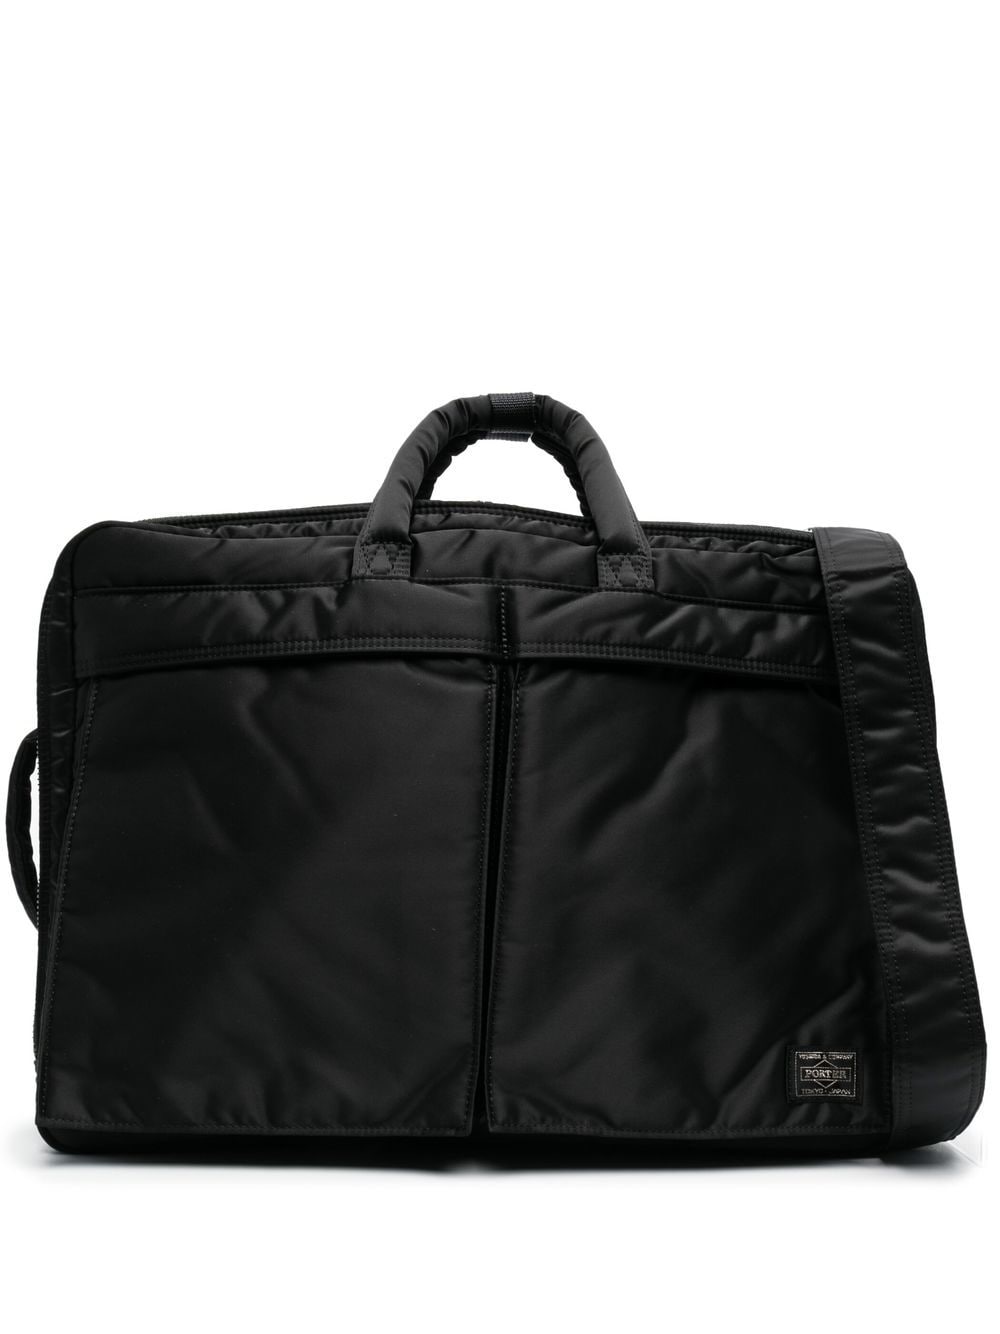 Porter-Yoshida & Co. zip-up laptop bag - Black